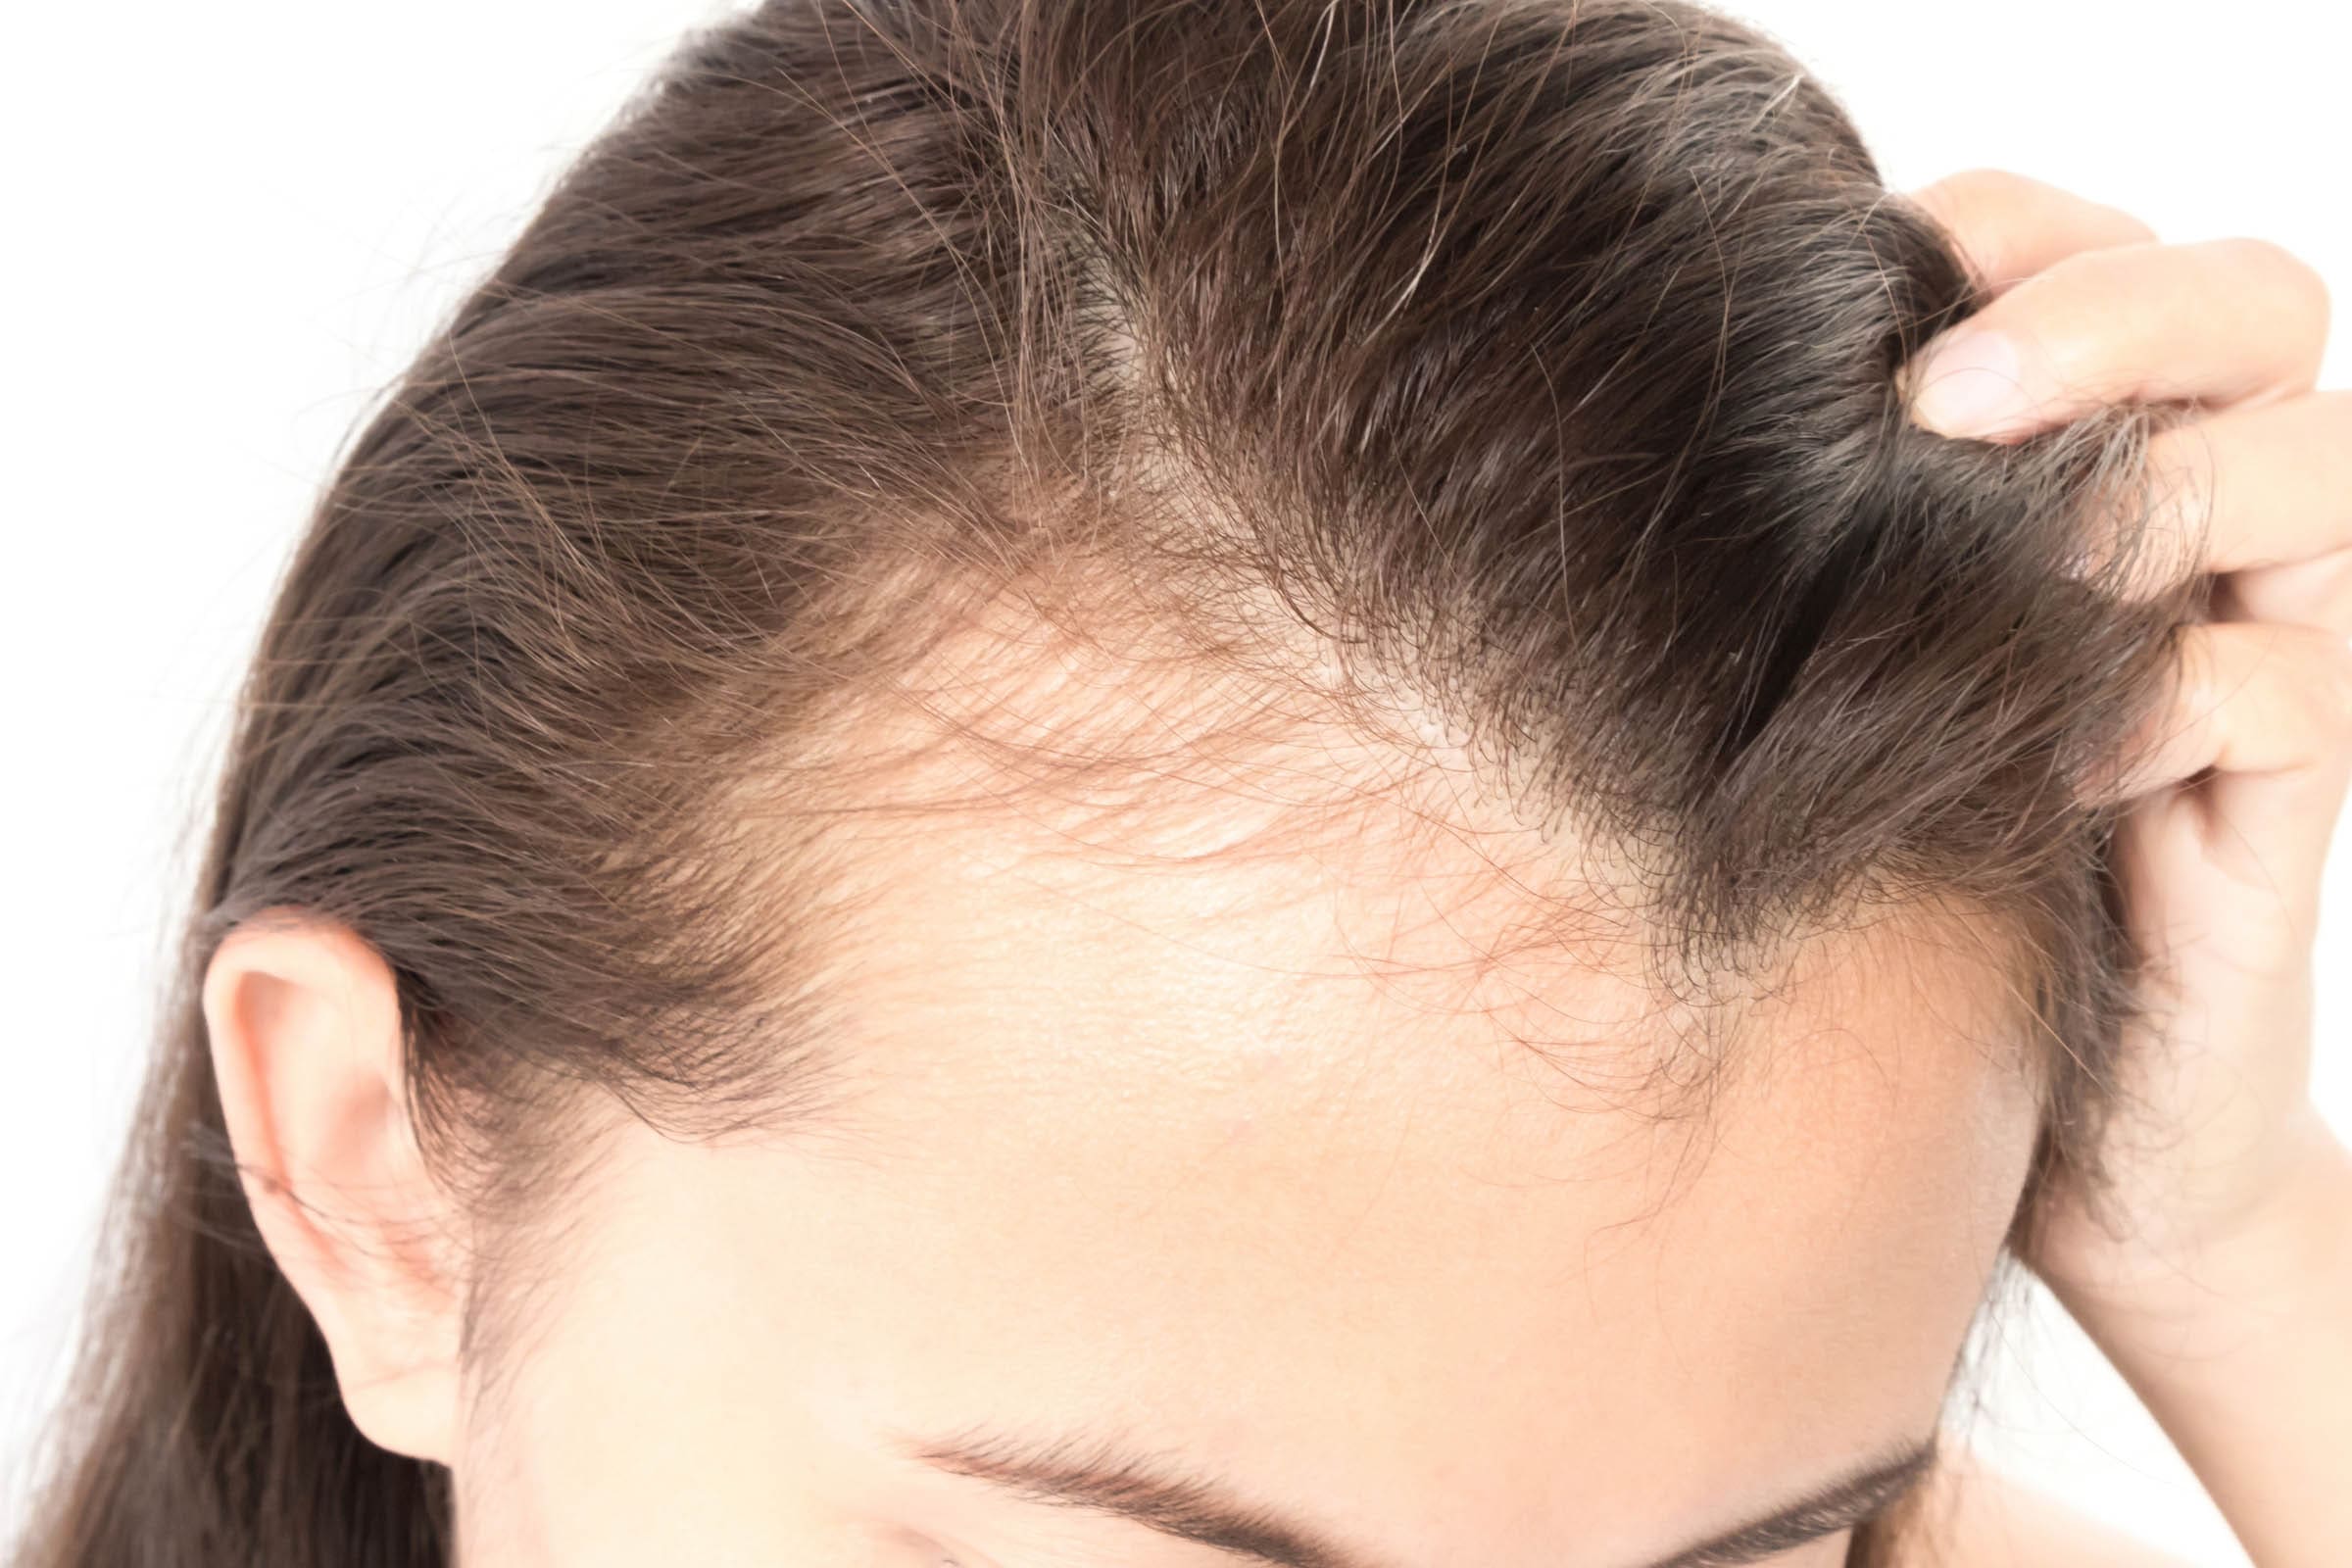 National Hair Loss Awareness Month